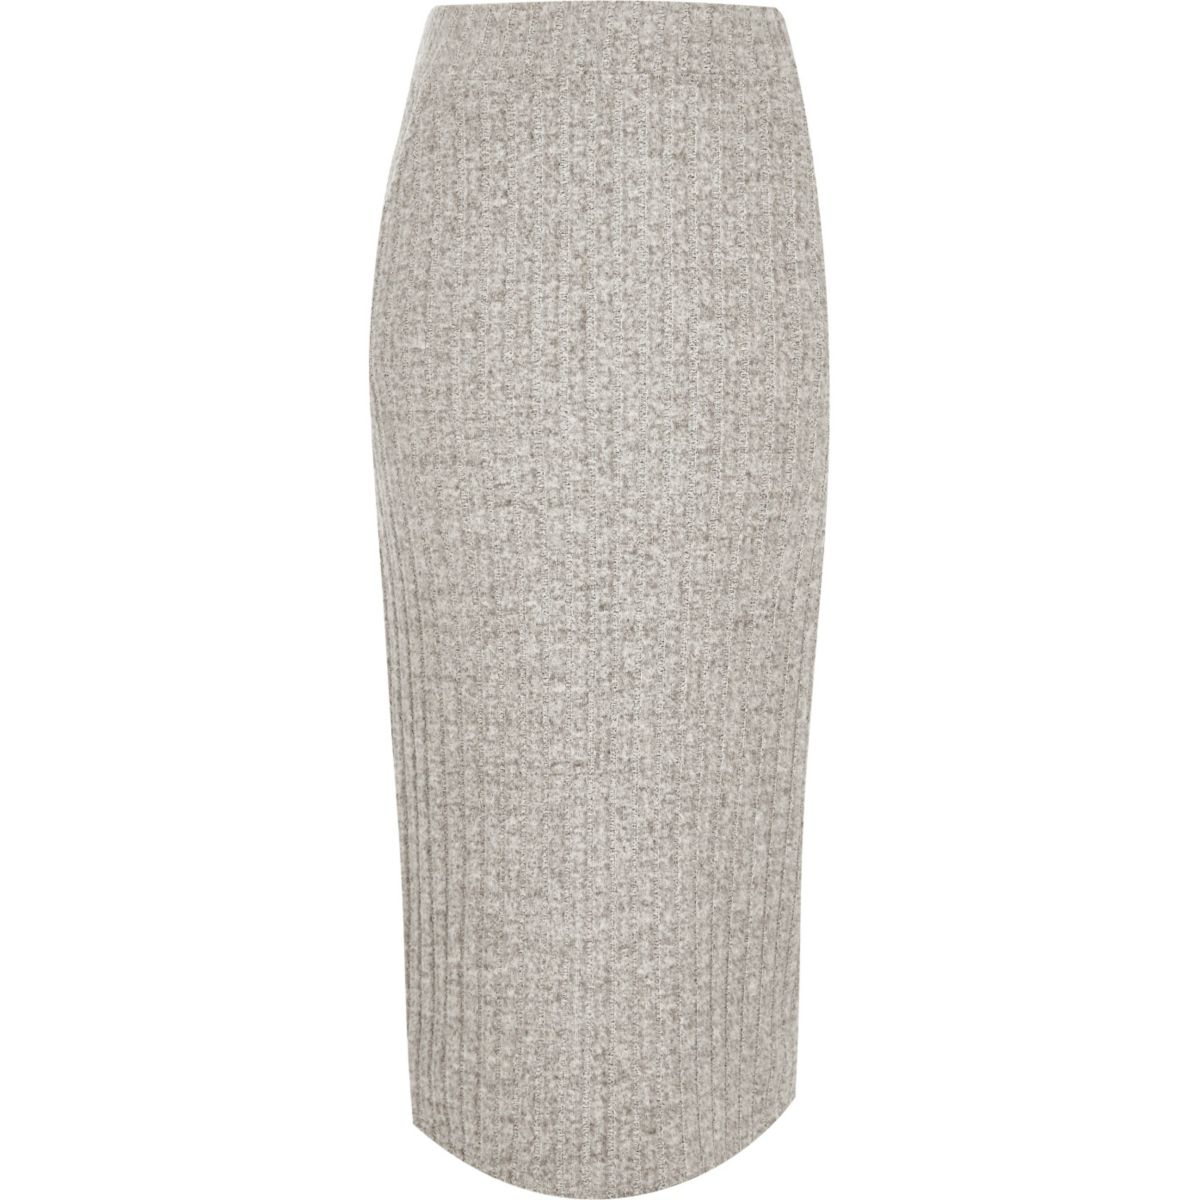 Grey ribbed knit midi skirt - Skirts - Sale - women